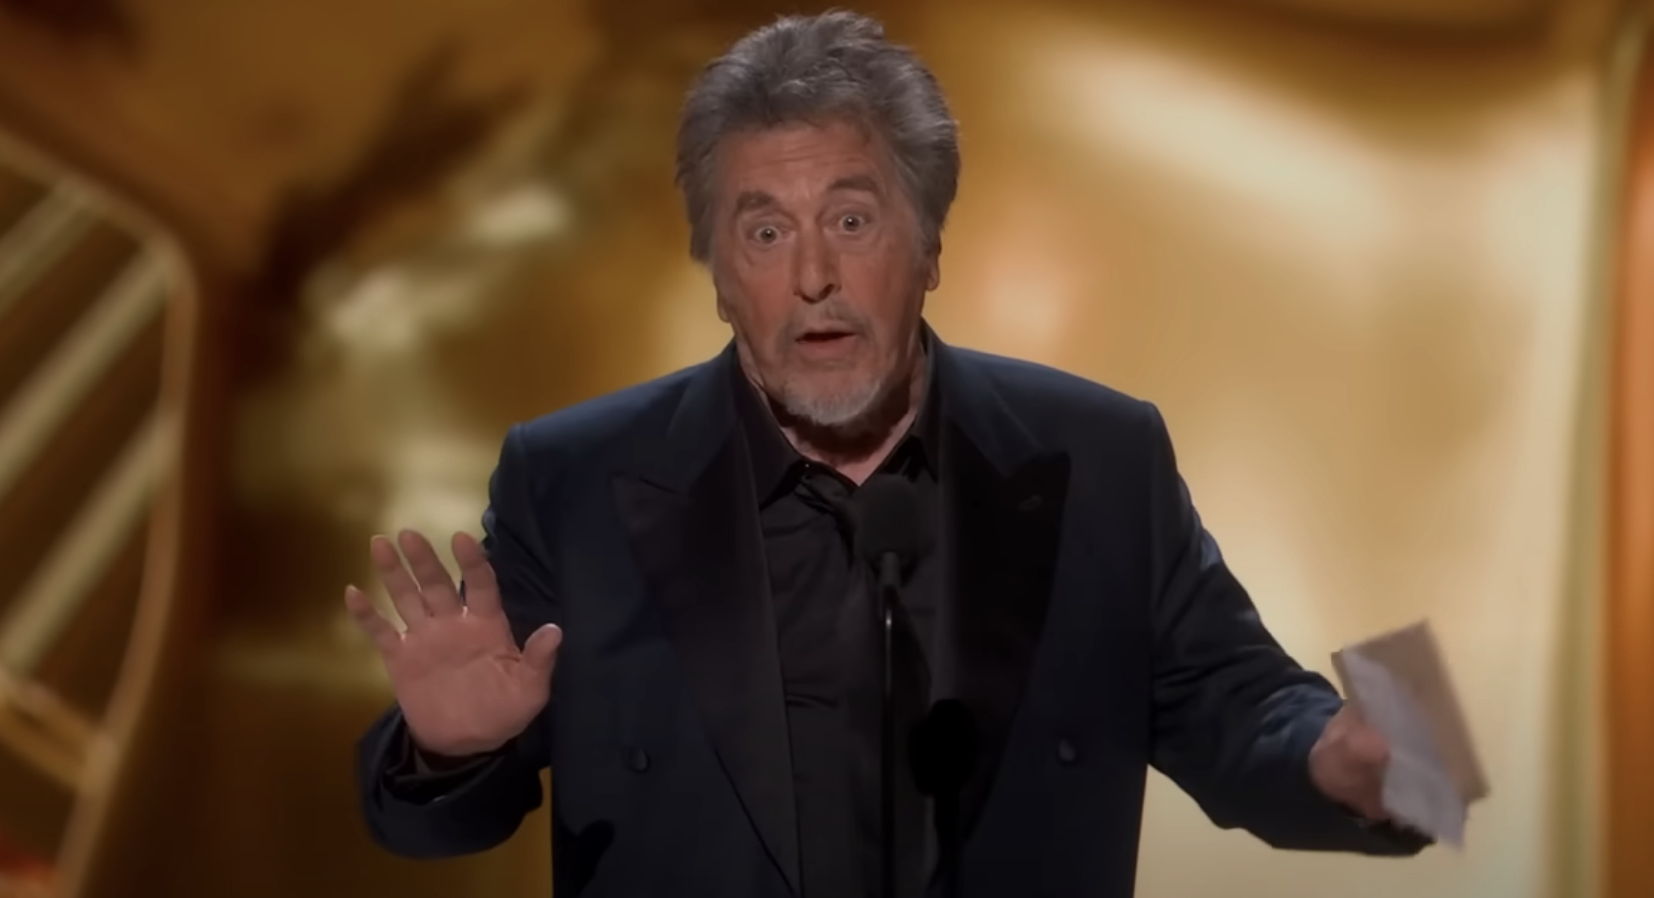 Al Pacino in a classic suit, gesturing